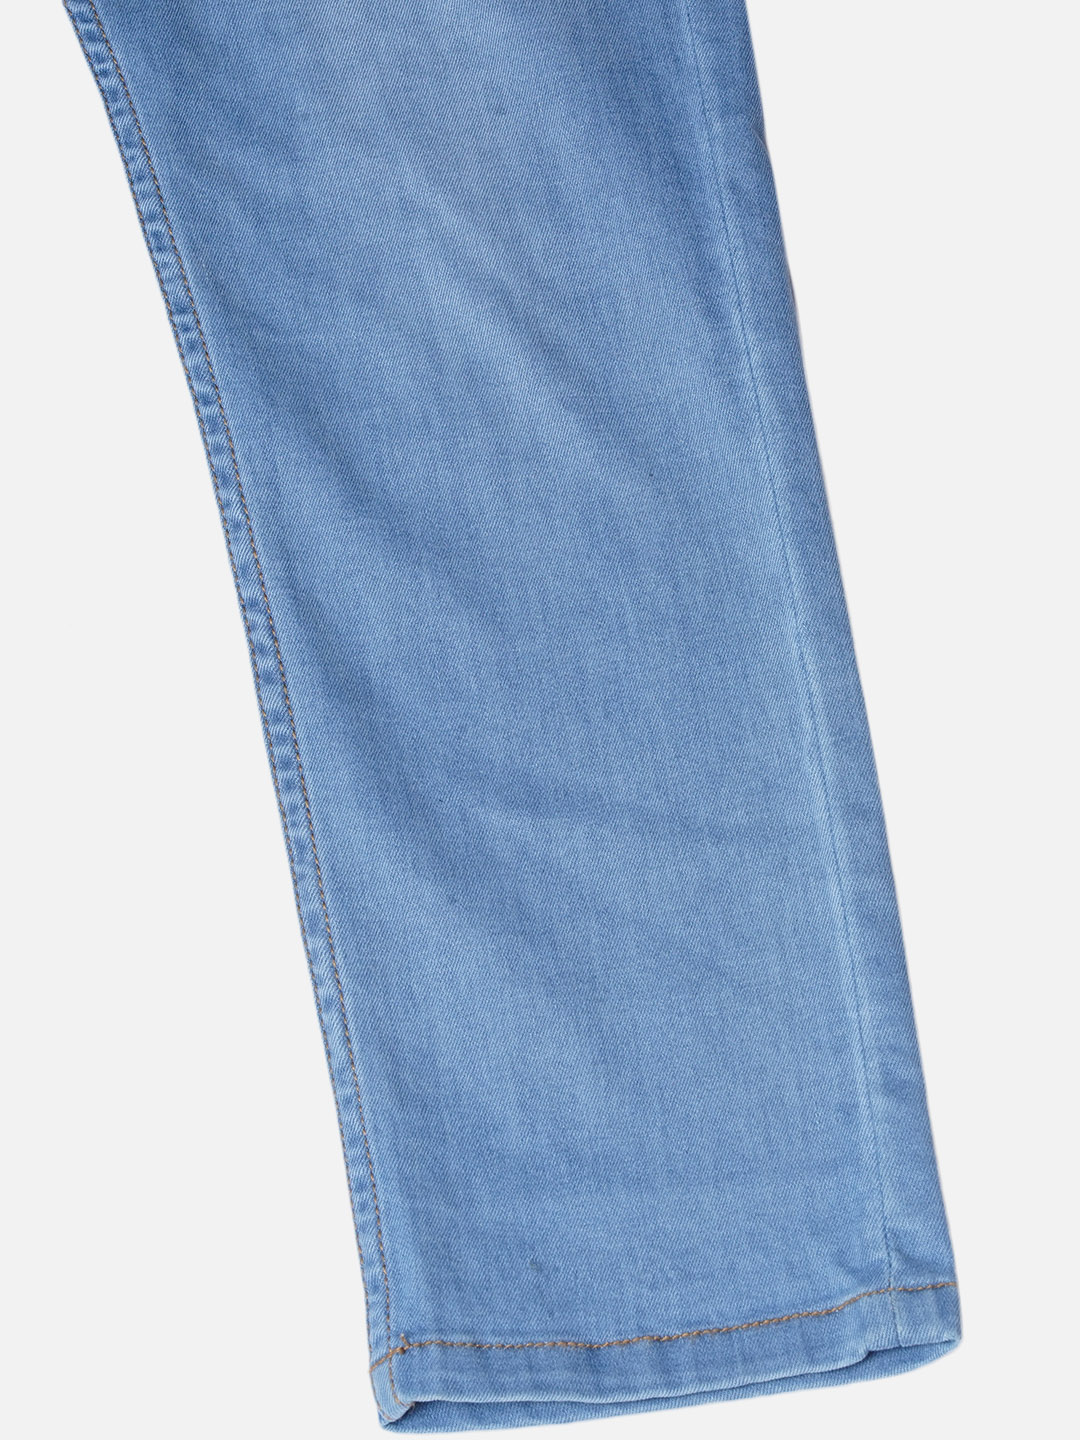 bottomwear_kiaahvi/jeans/KIAJ37/kiaj37-2.jpg